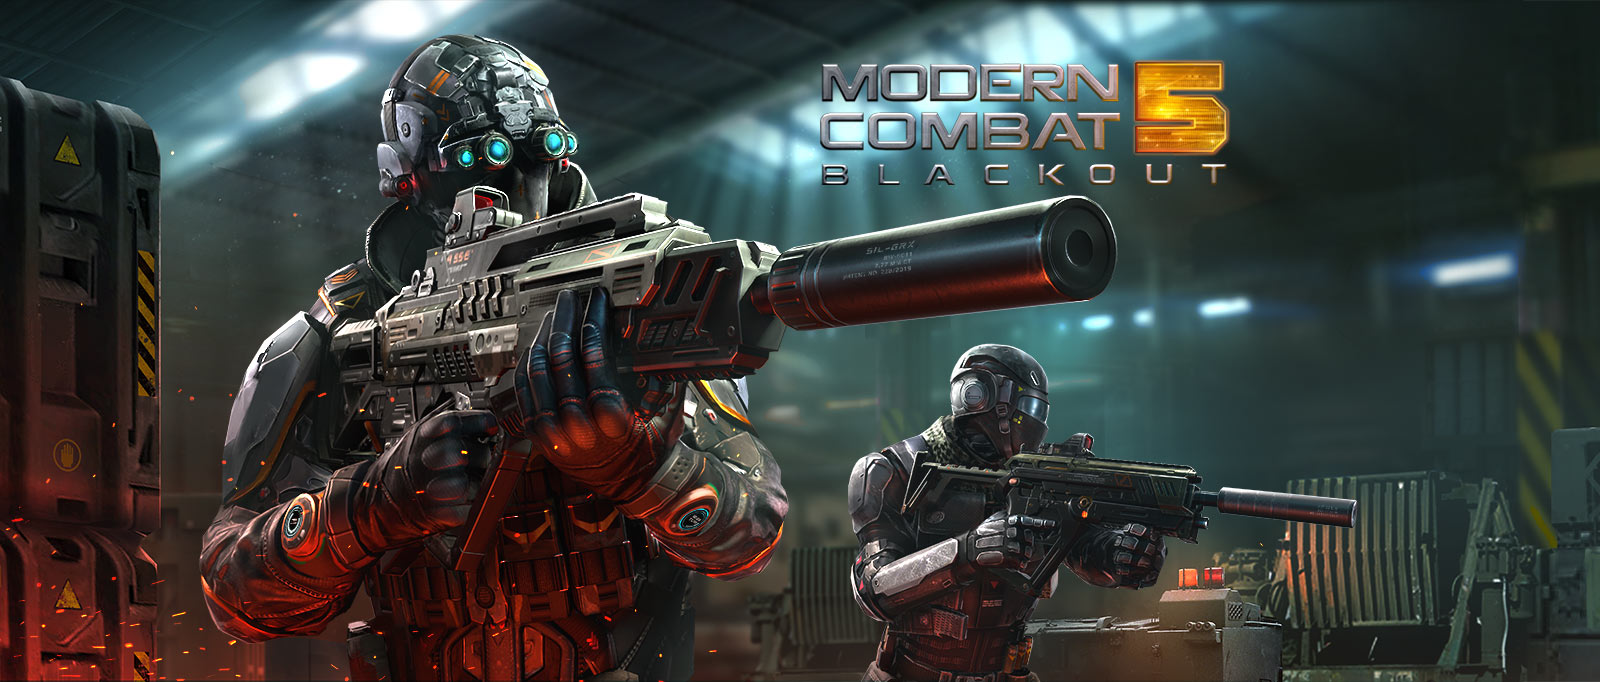 Modern Combat 5: Blackout razer phone